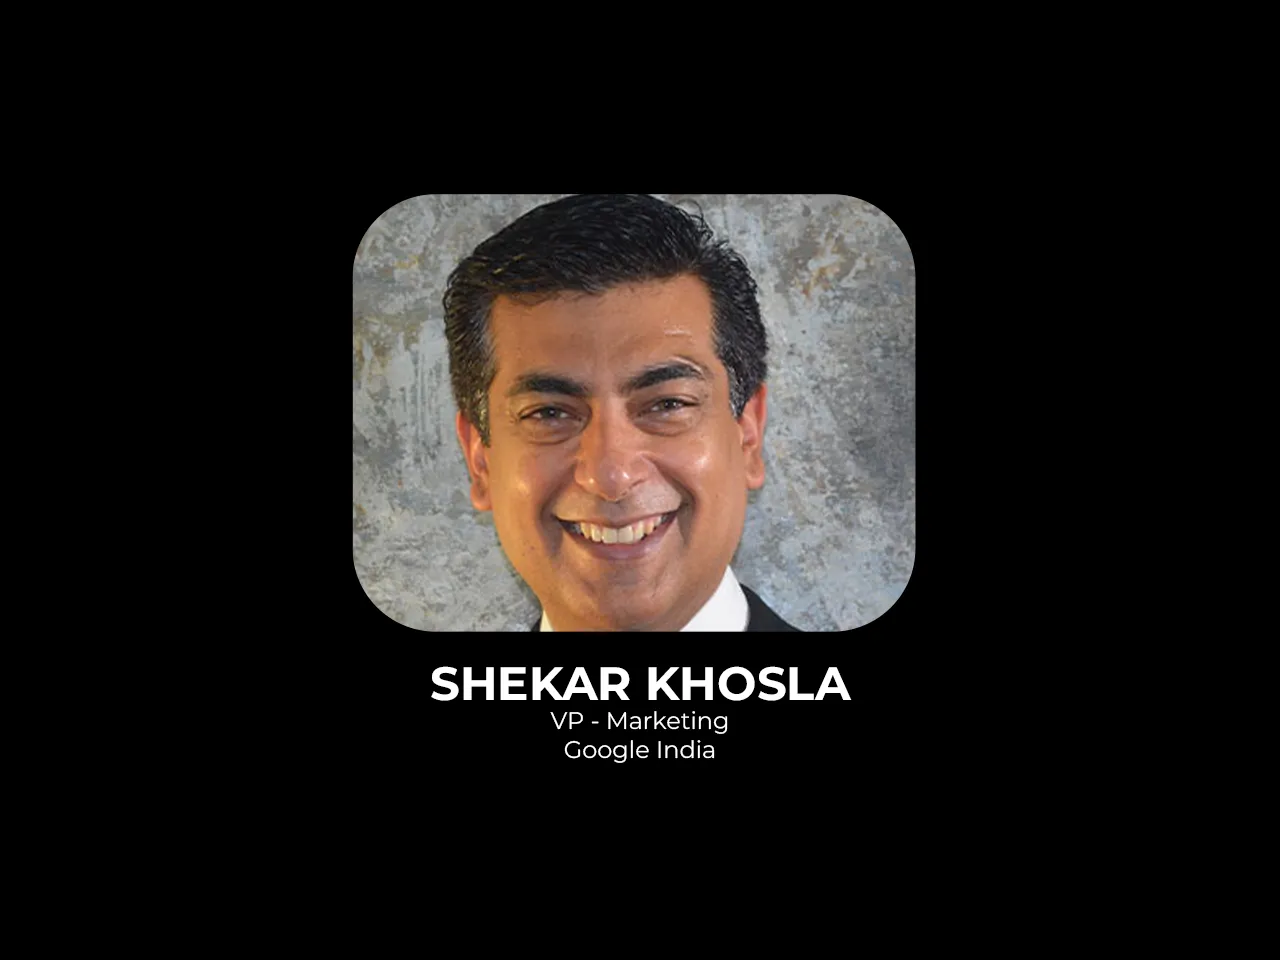 Shekar Khosla appointed as VP - Marketing at Google India